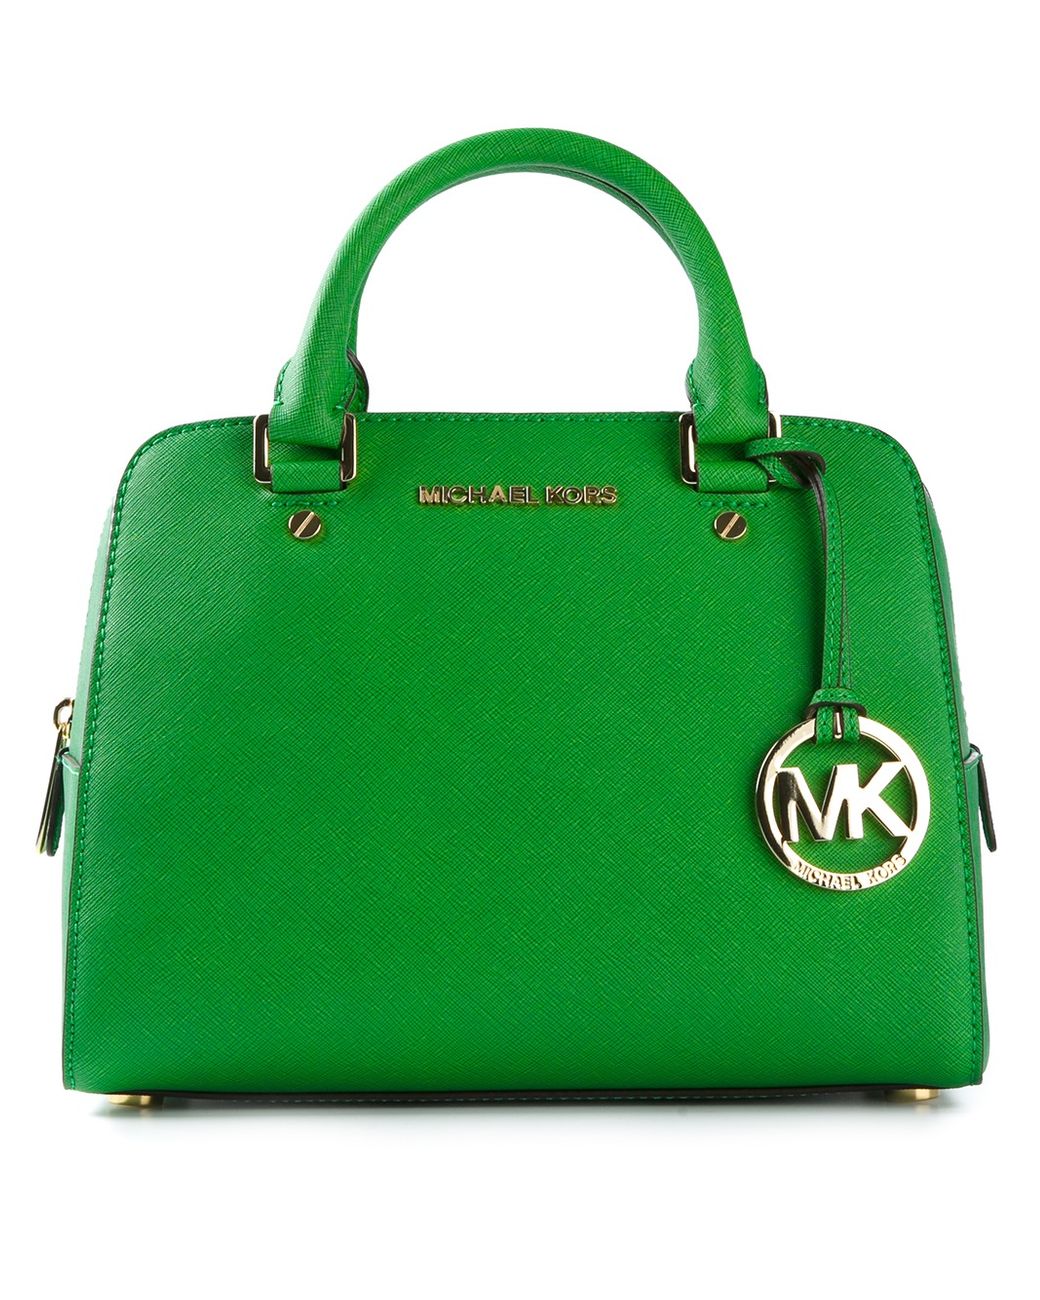 Michael Kors Logo Monogram Shoulder Bag in Green